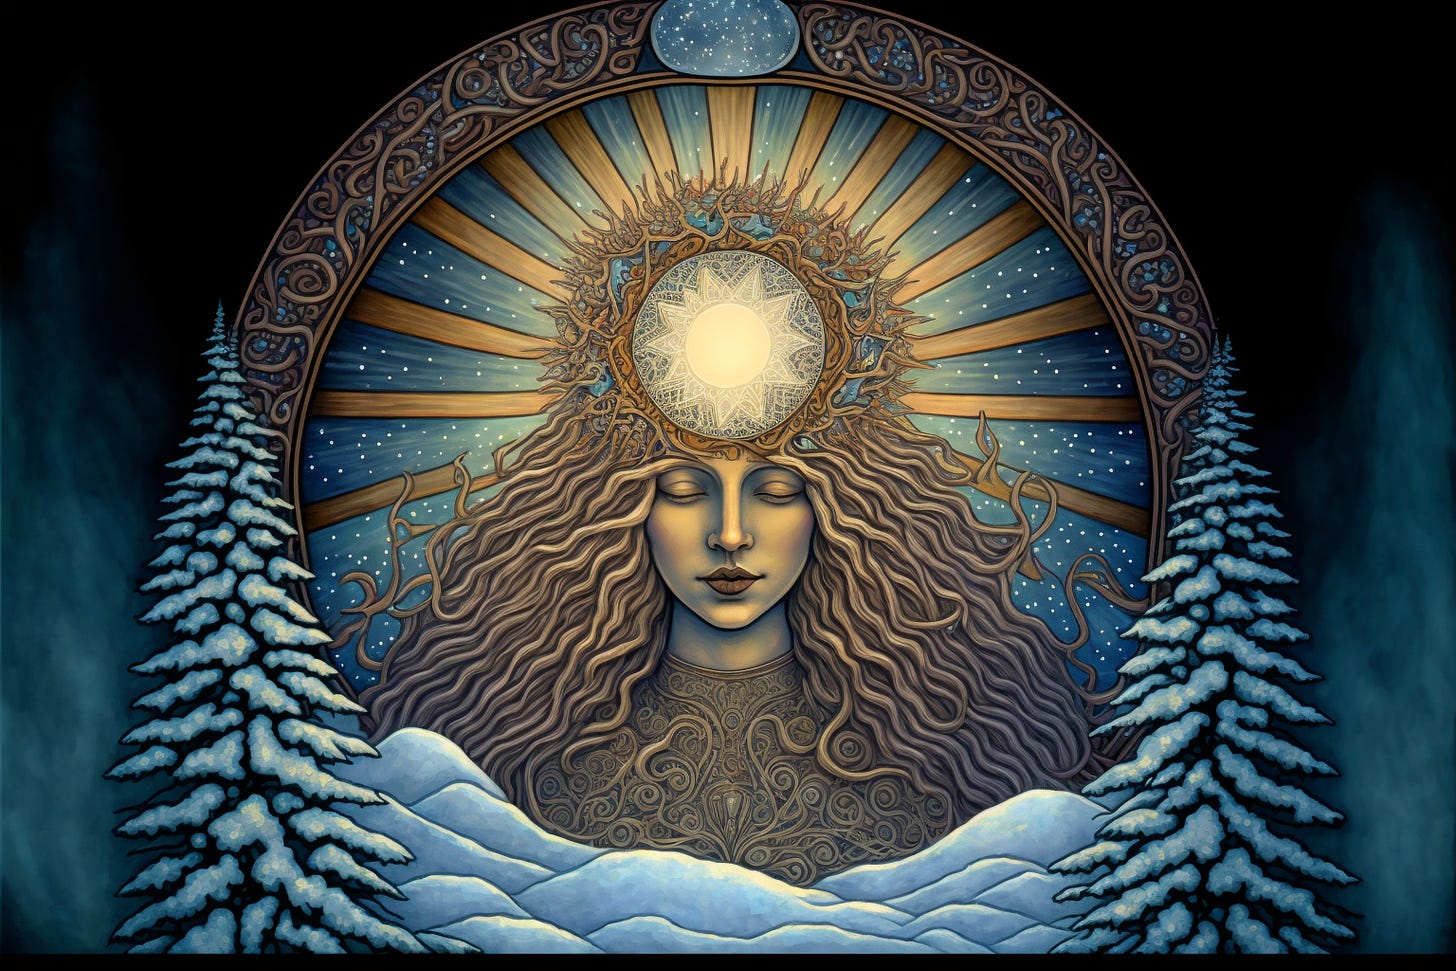 winter solstice visionary art, goddess of the newborn sun waking up above snowy fields